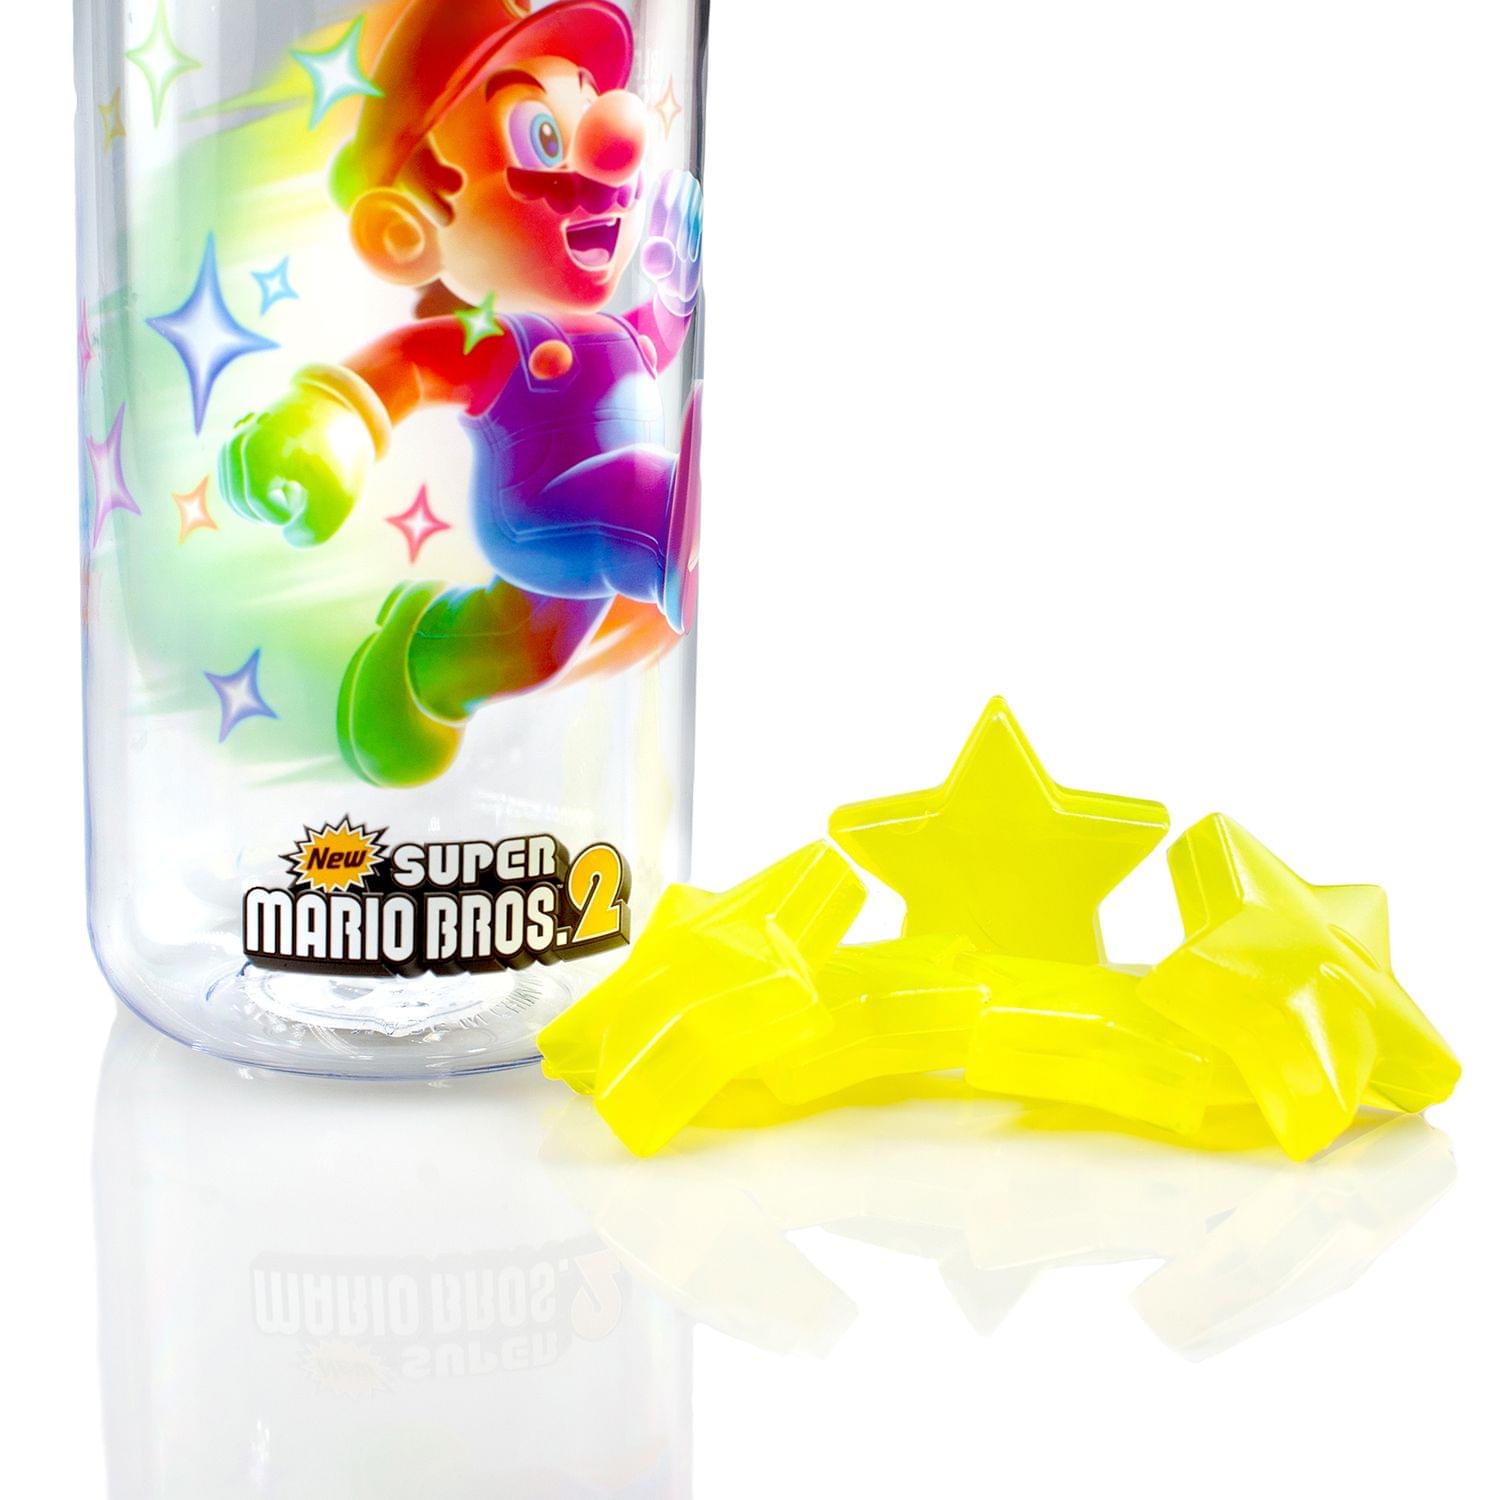 Super Mario Bros 6-Inch Plastic Water Bottle | Super Star Ice Cubes